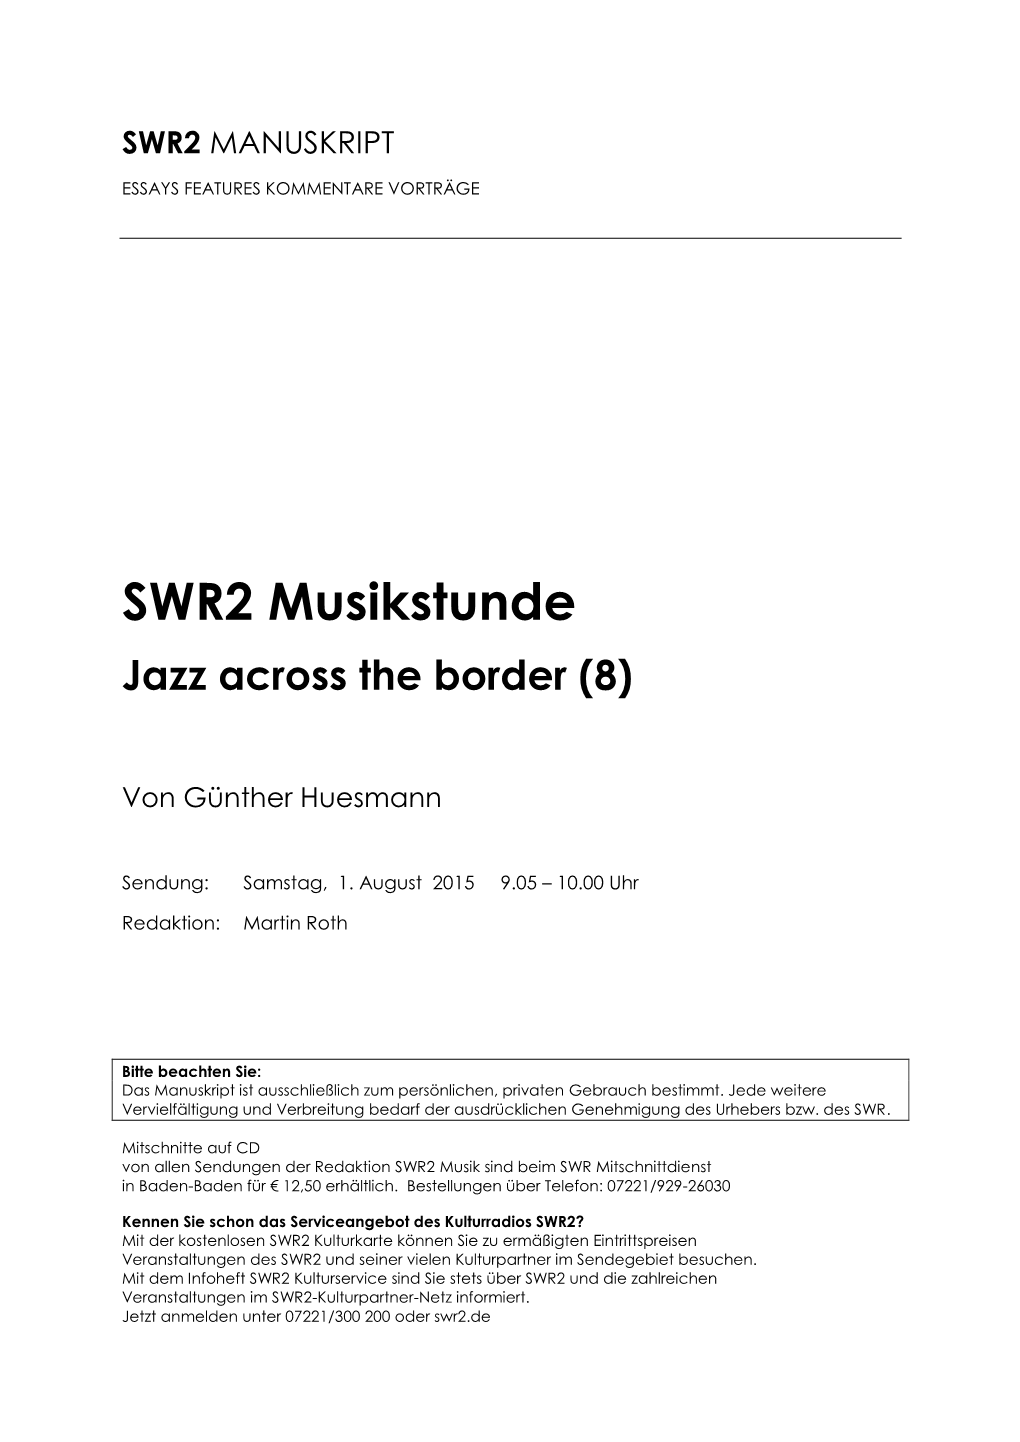 SWR2 Musikstunde Jazz Across the Border (8)